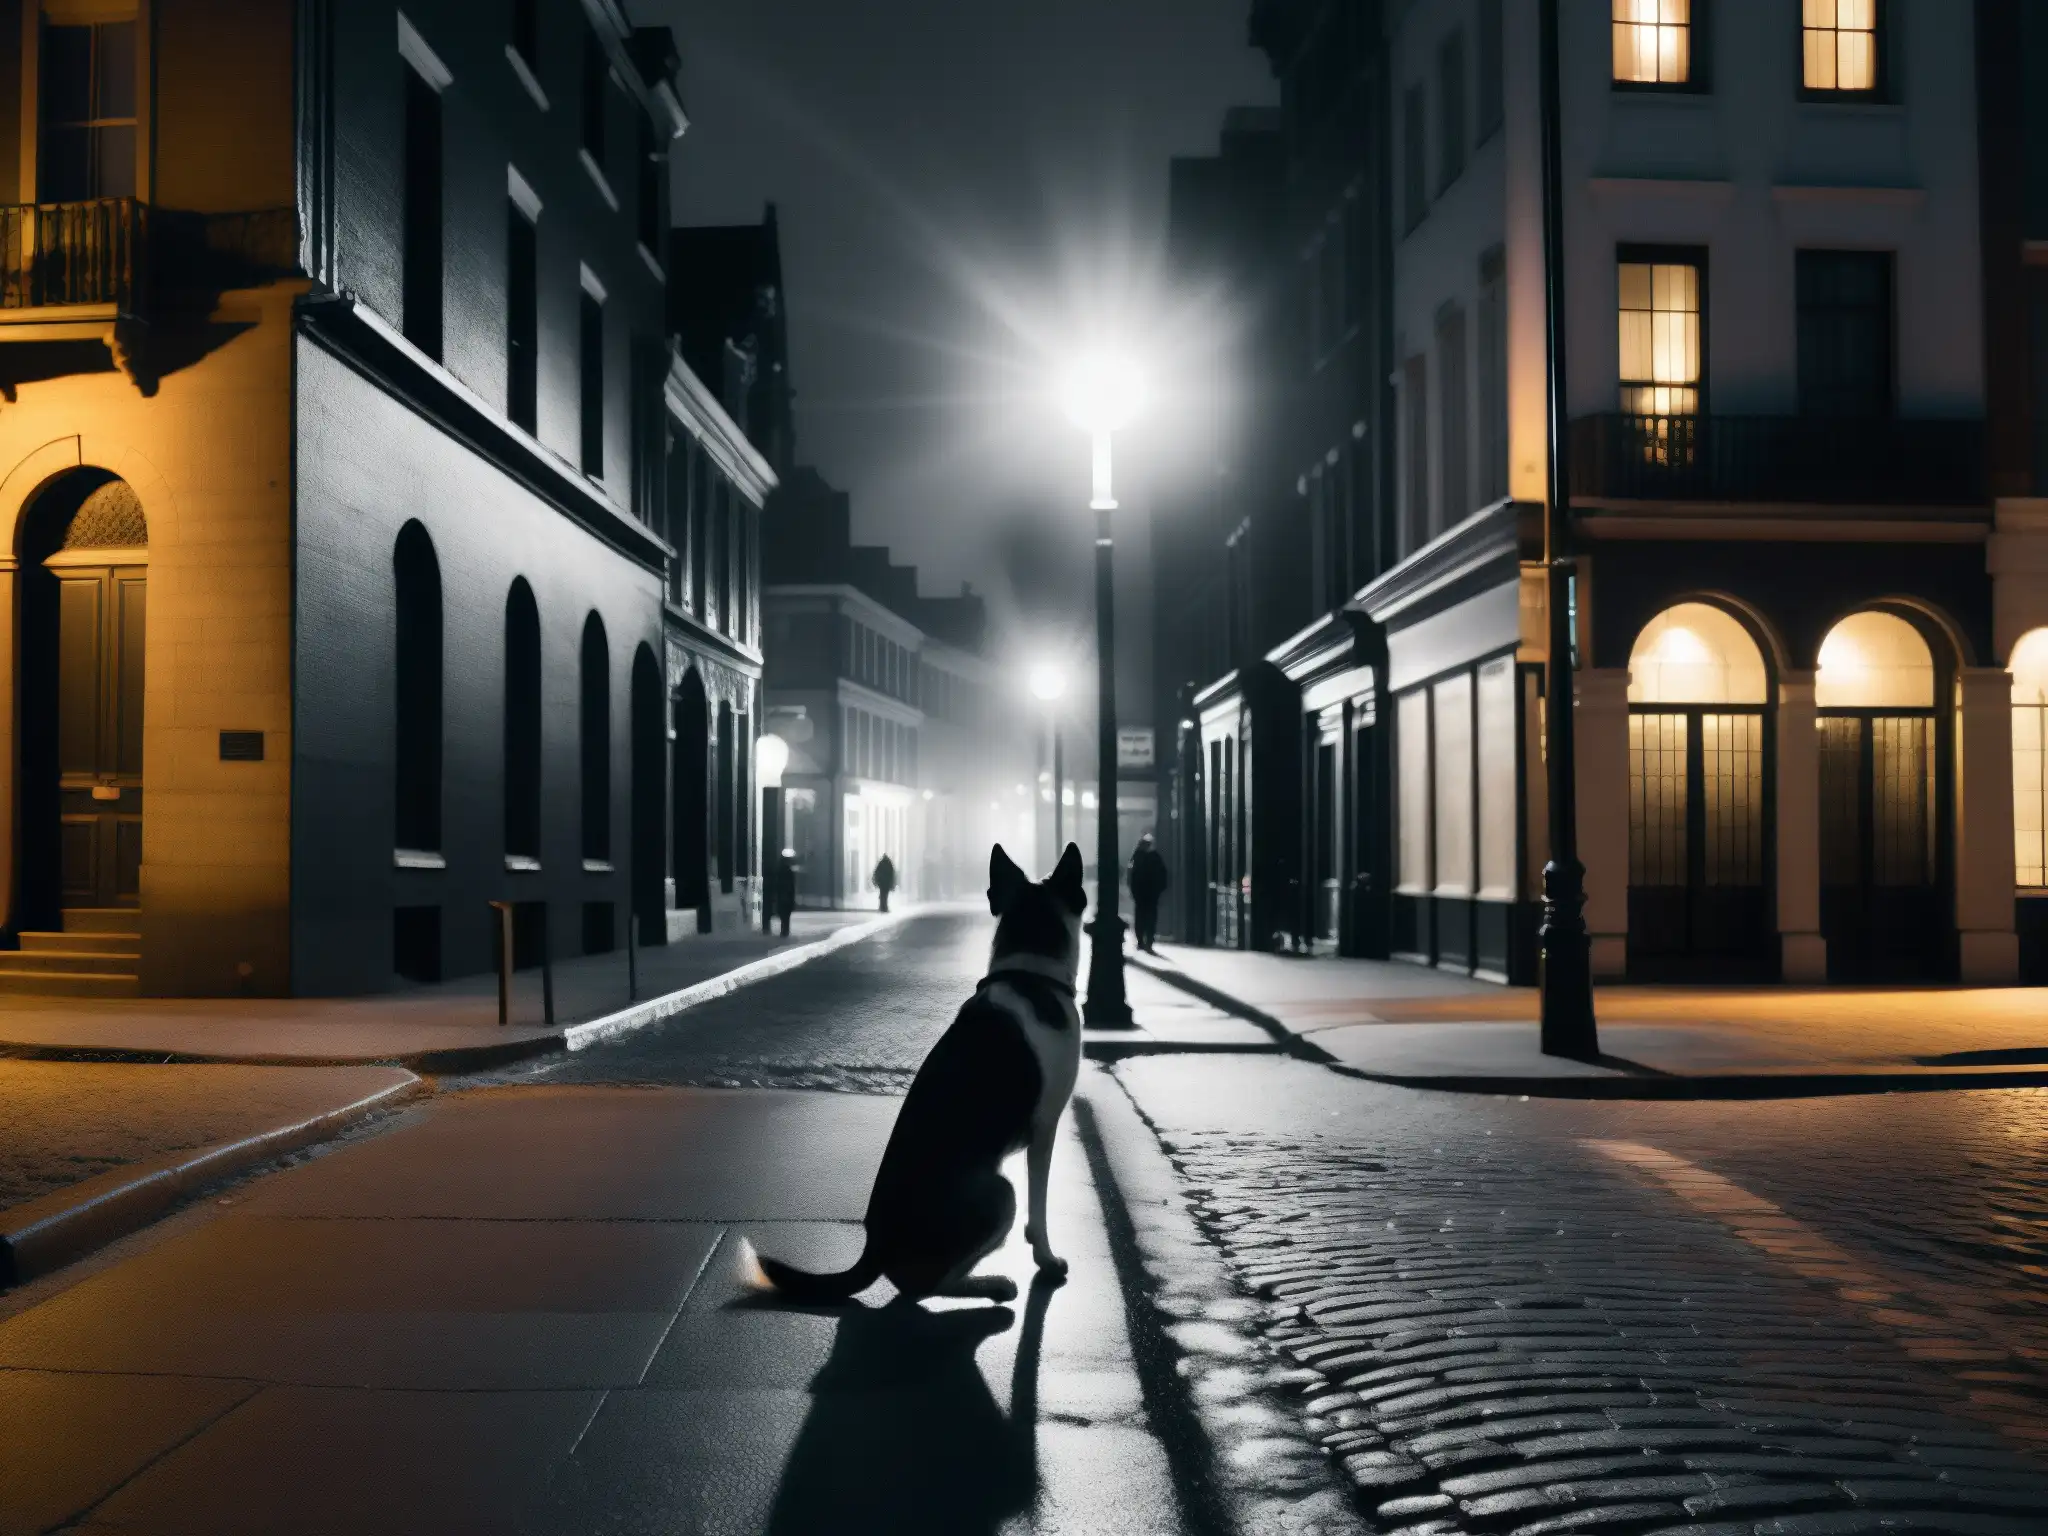 En la misteriosa noche urbana, un perro con mirada humana pasea bajo la luz tenue, evocando la leyenda urbana del Jinmenken